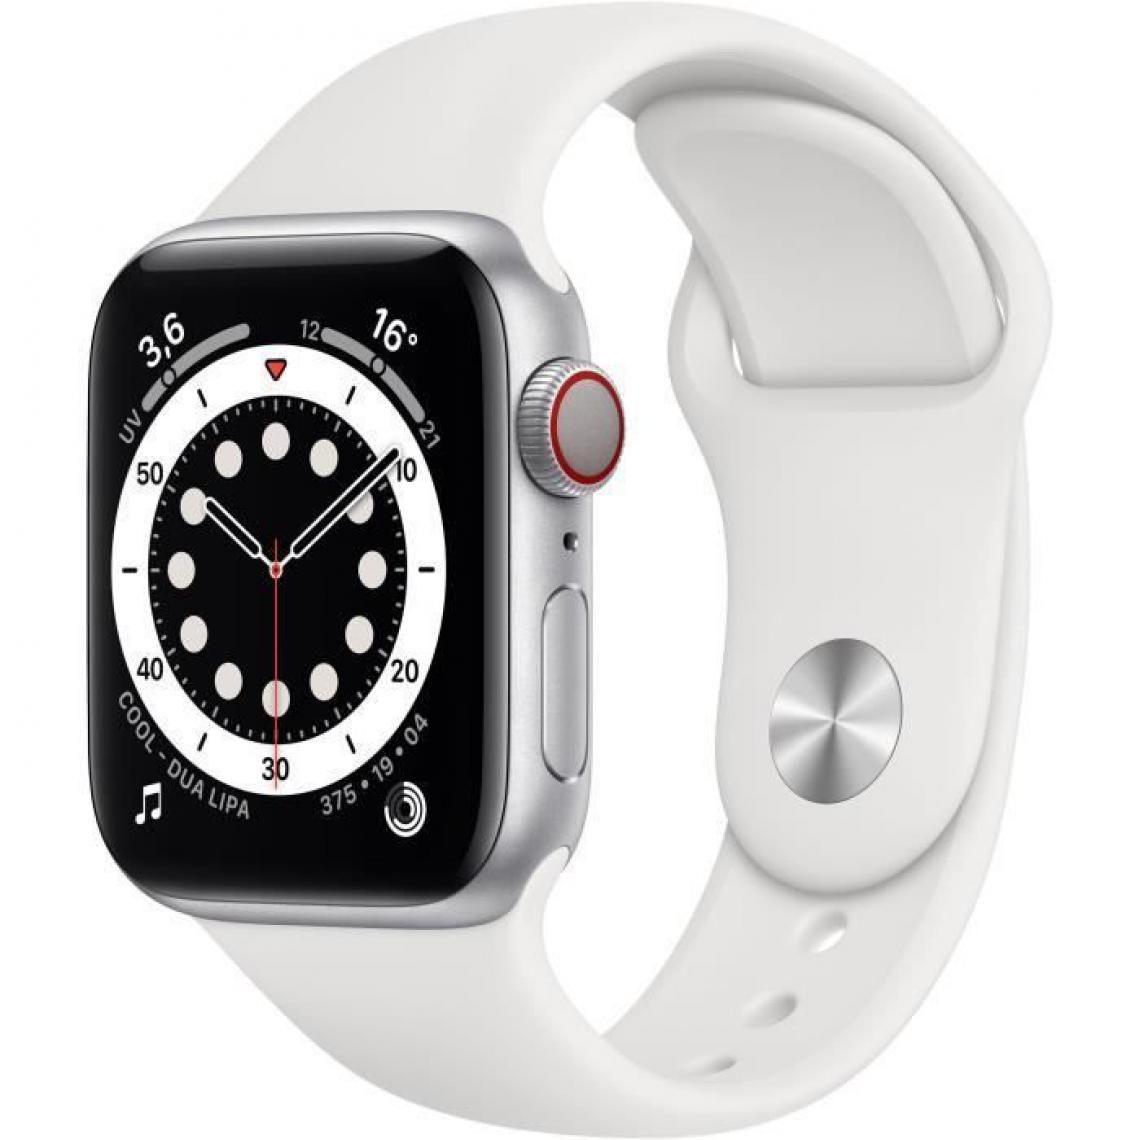 Apple - Apple Watch Series 6 GPS + Cellular, 40mm Boîtier en Aluminium Argent avec Bracelet Sport Blanc - Apple Watch